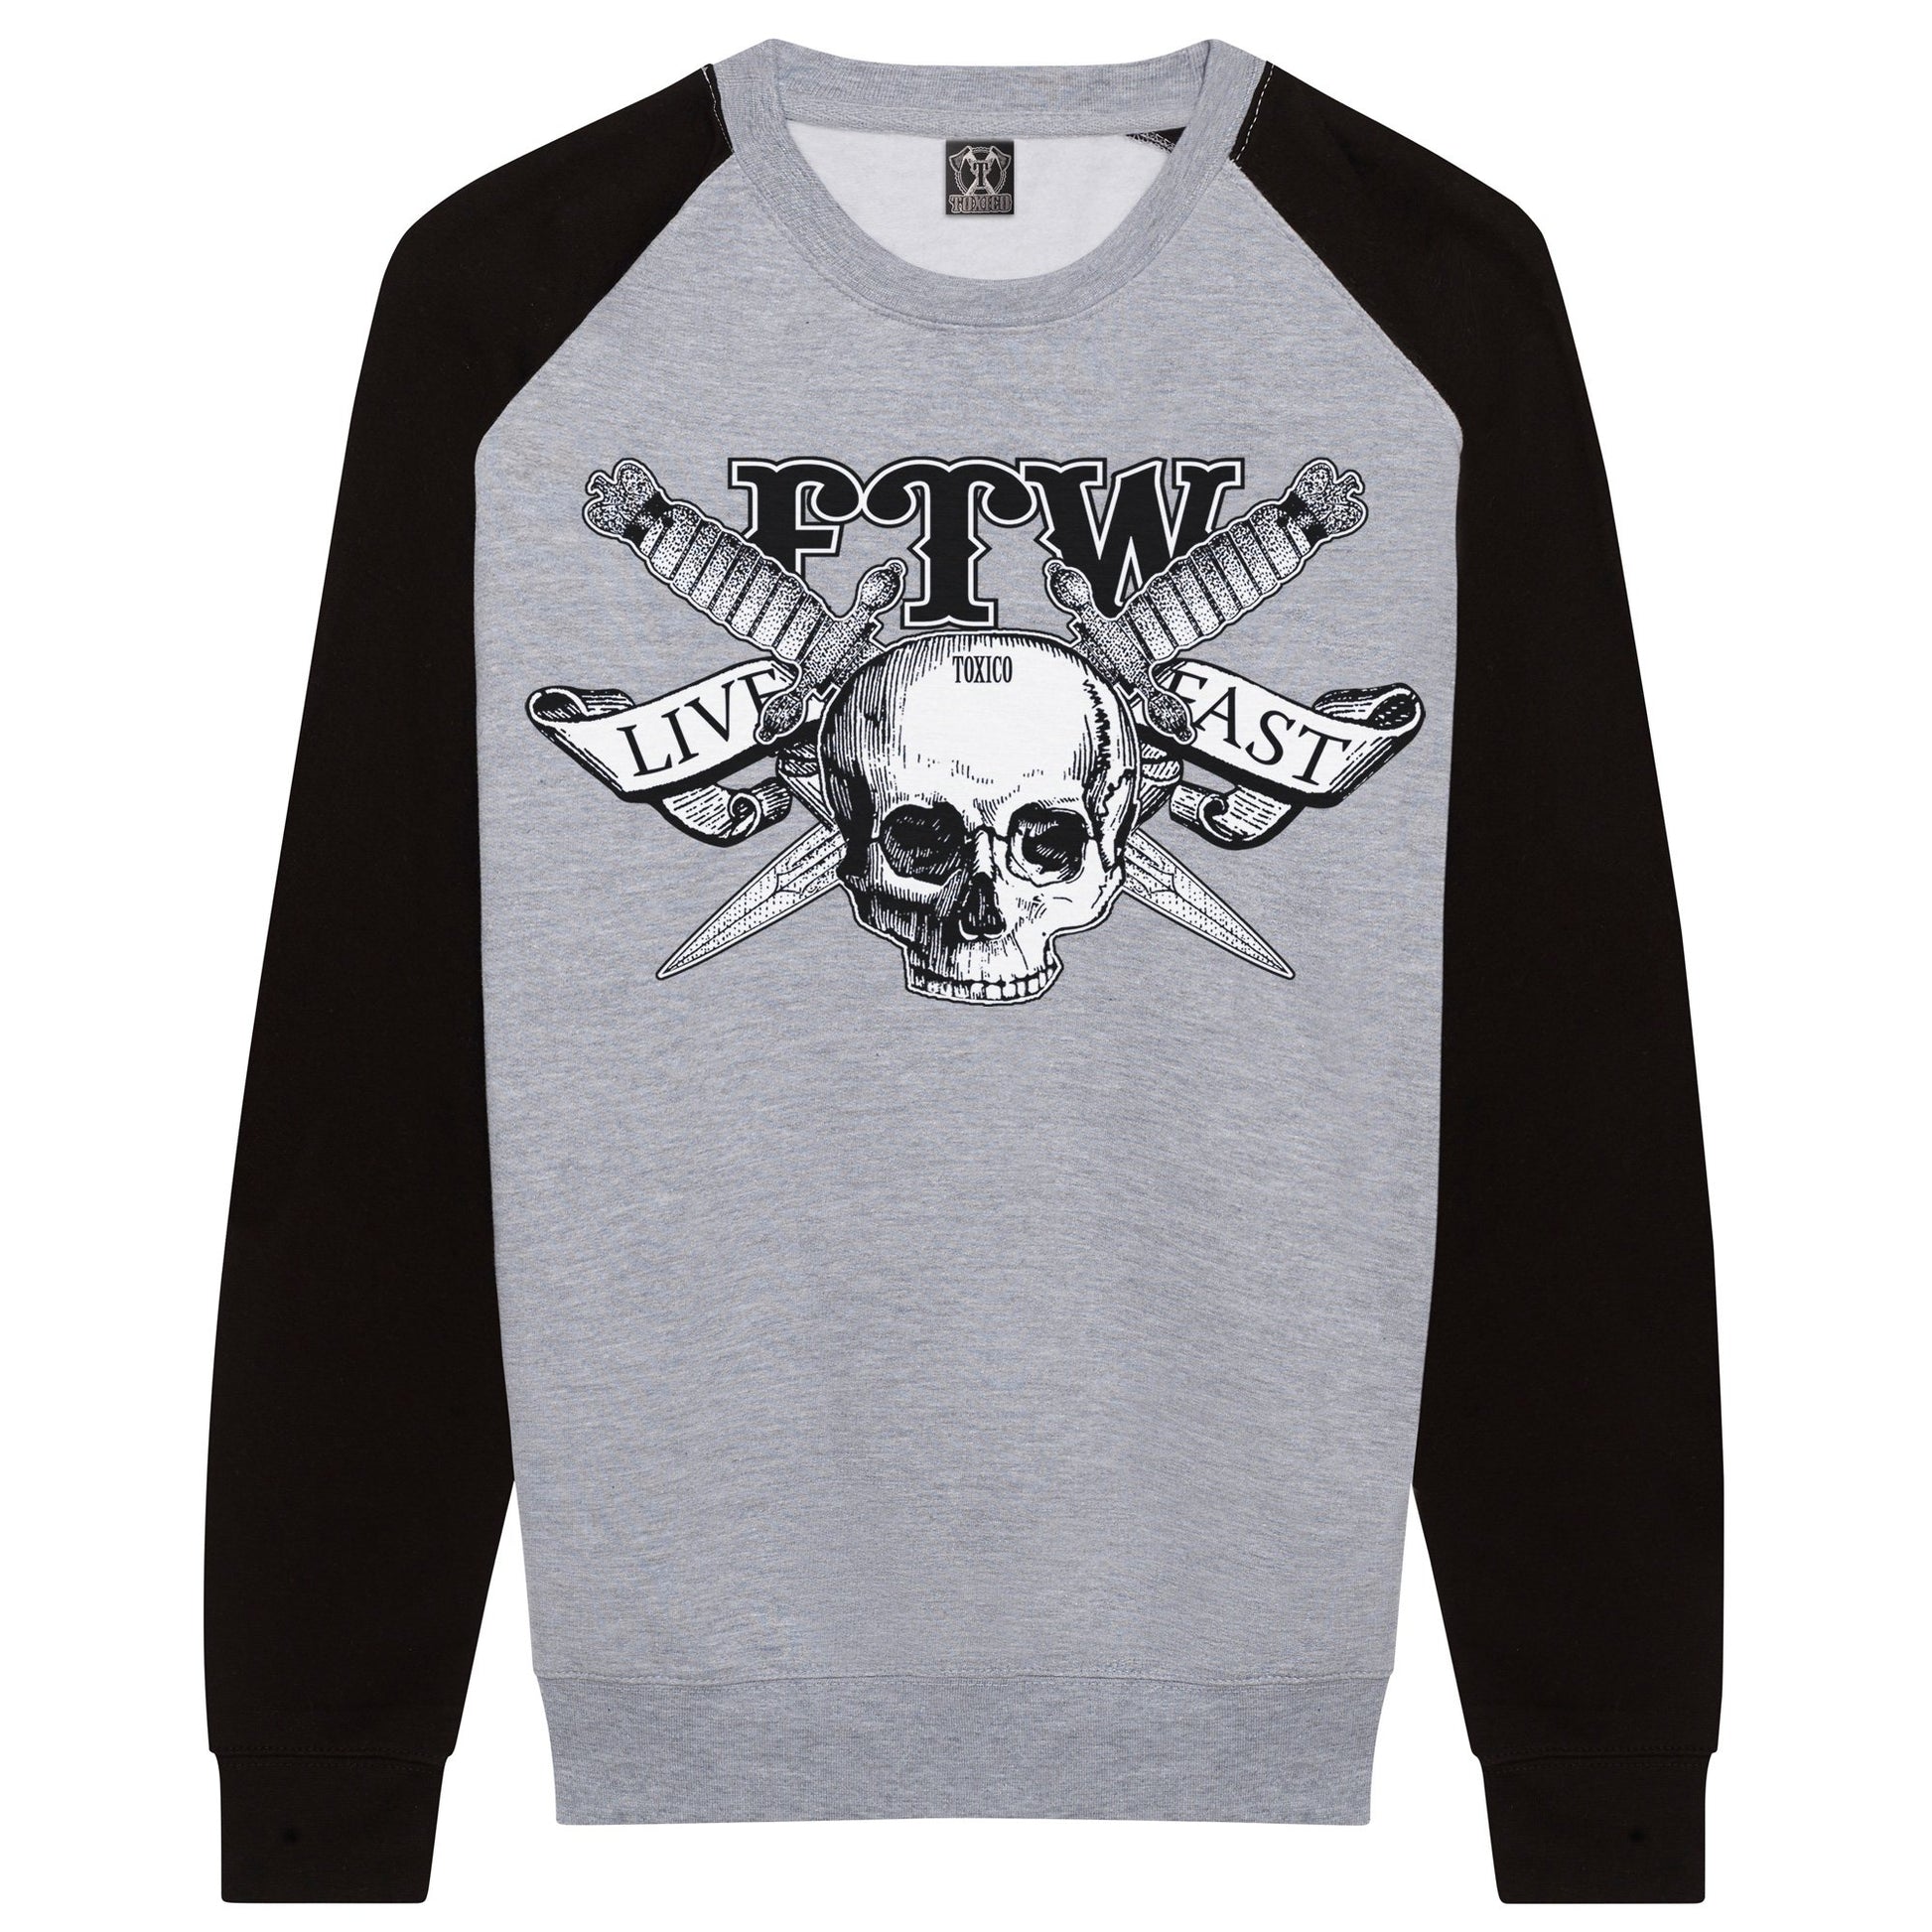 Toxico Mens Rocker Biker Alternative Punk Metal Outlaw FTW Raglan Crewneck Sweatshirt - Phoenix 212 Clothing